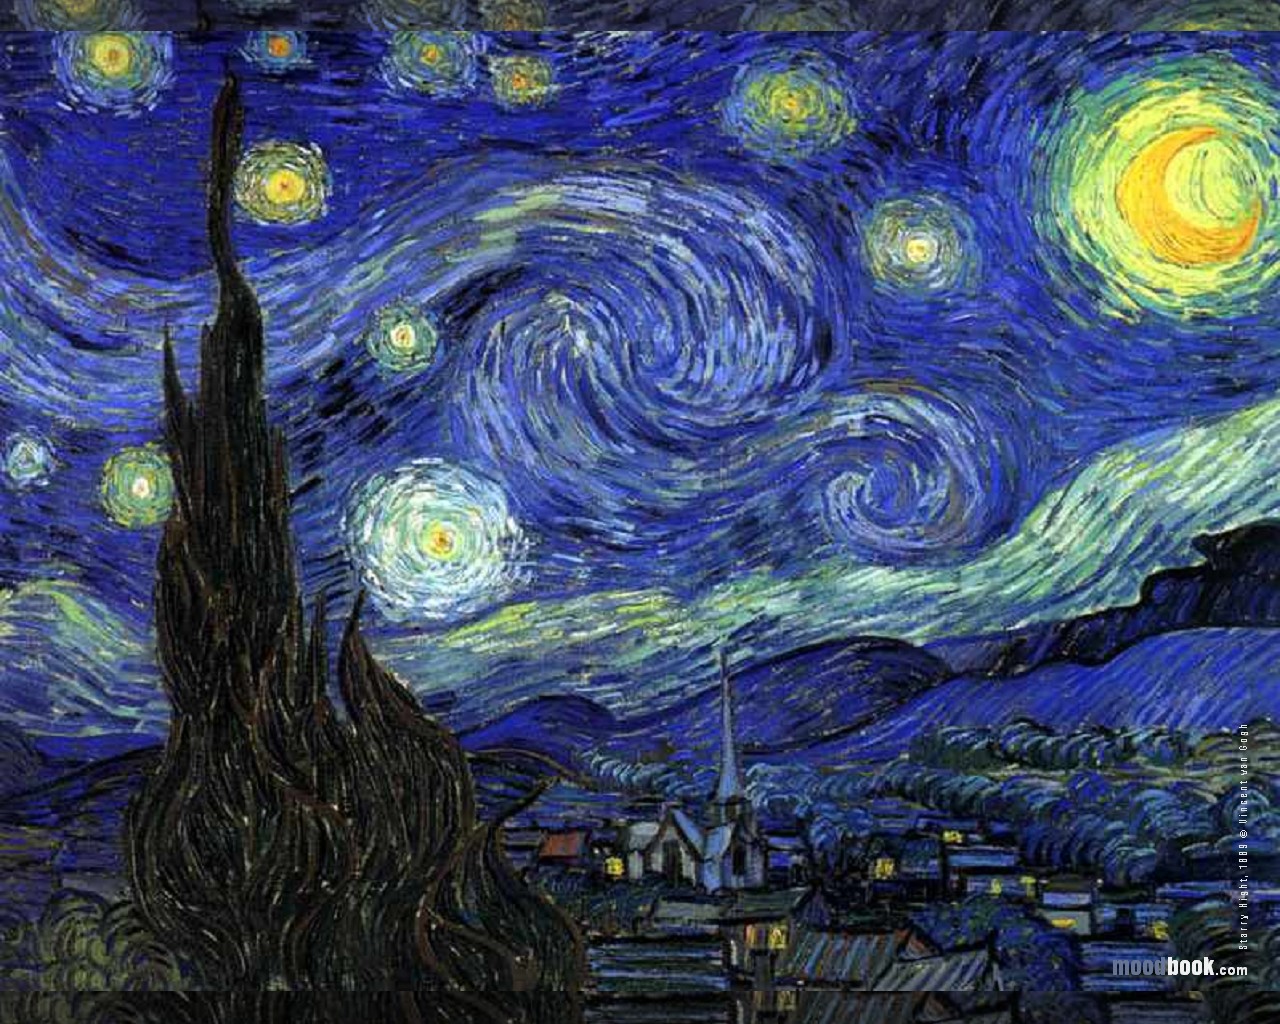 trololo blogg: Wallpaper Ipad Van Gogh